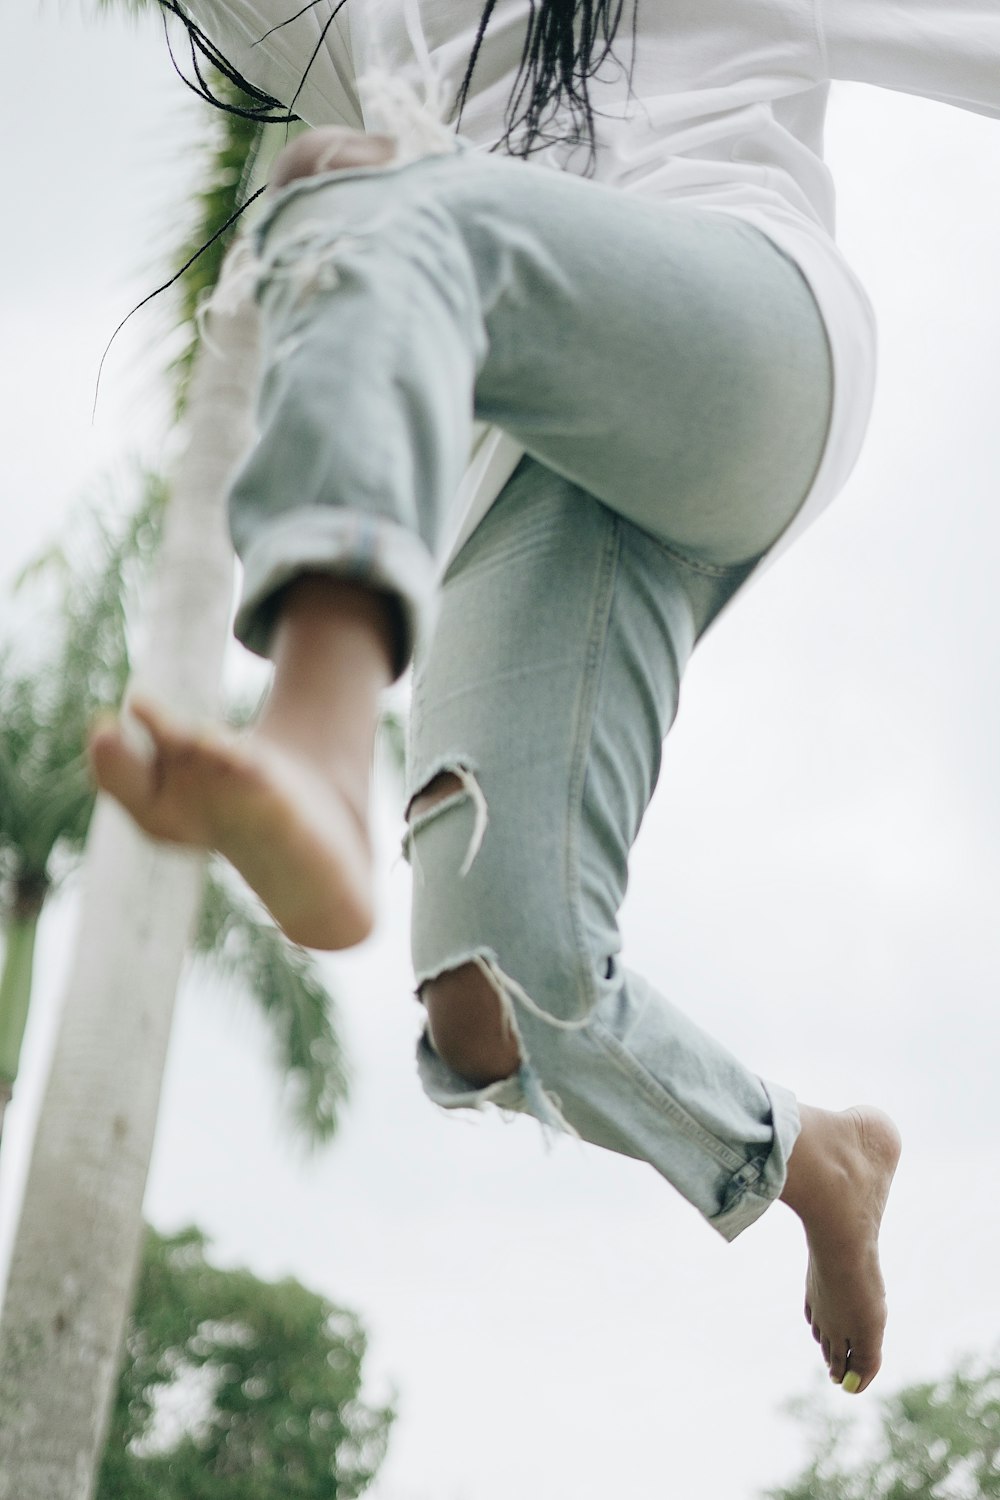 woman jumping near gray pole